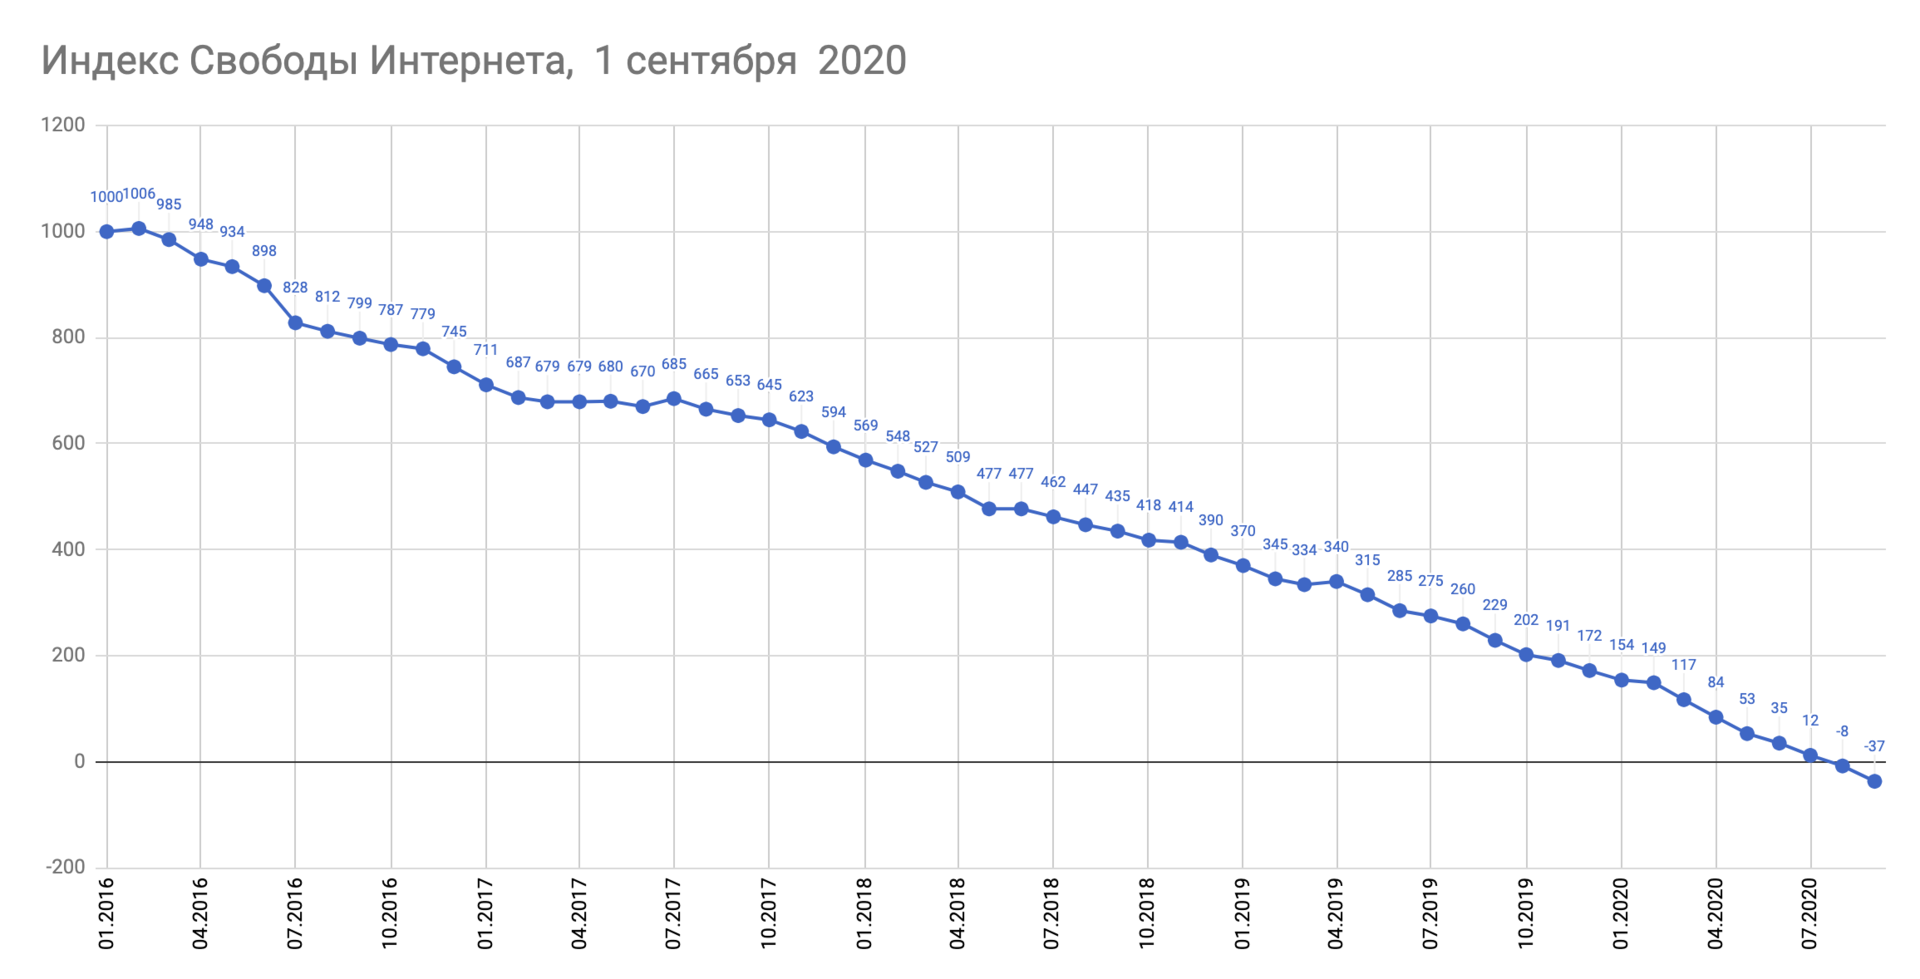 Internet freedom index in Russia fell below zero